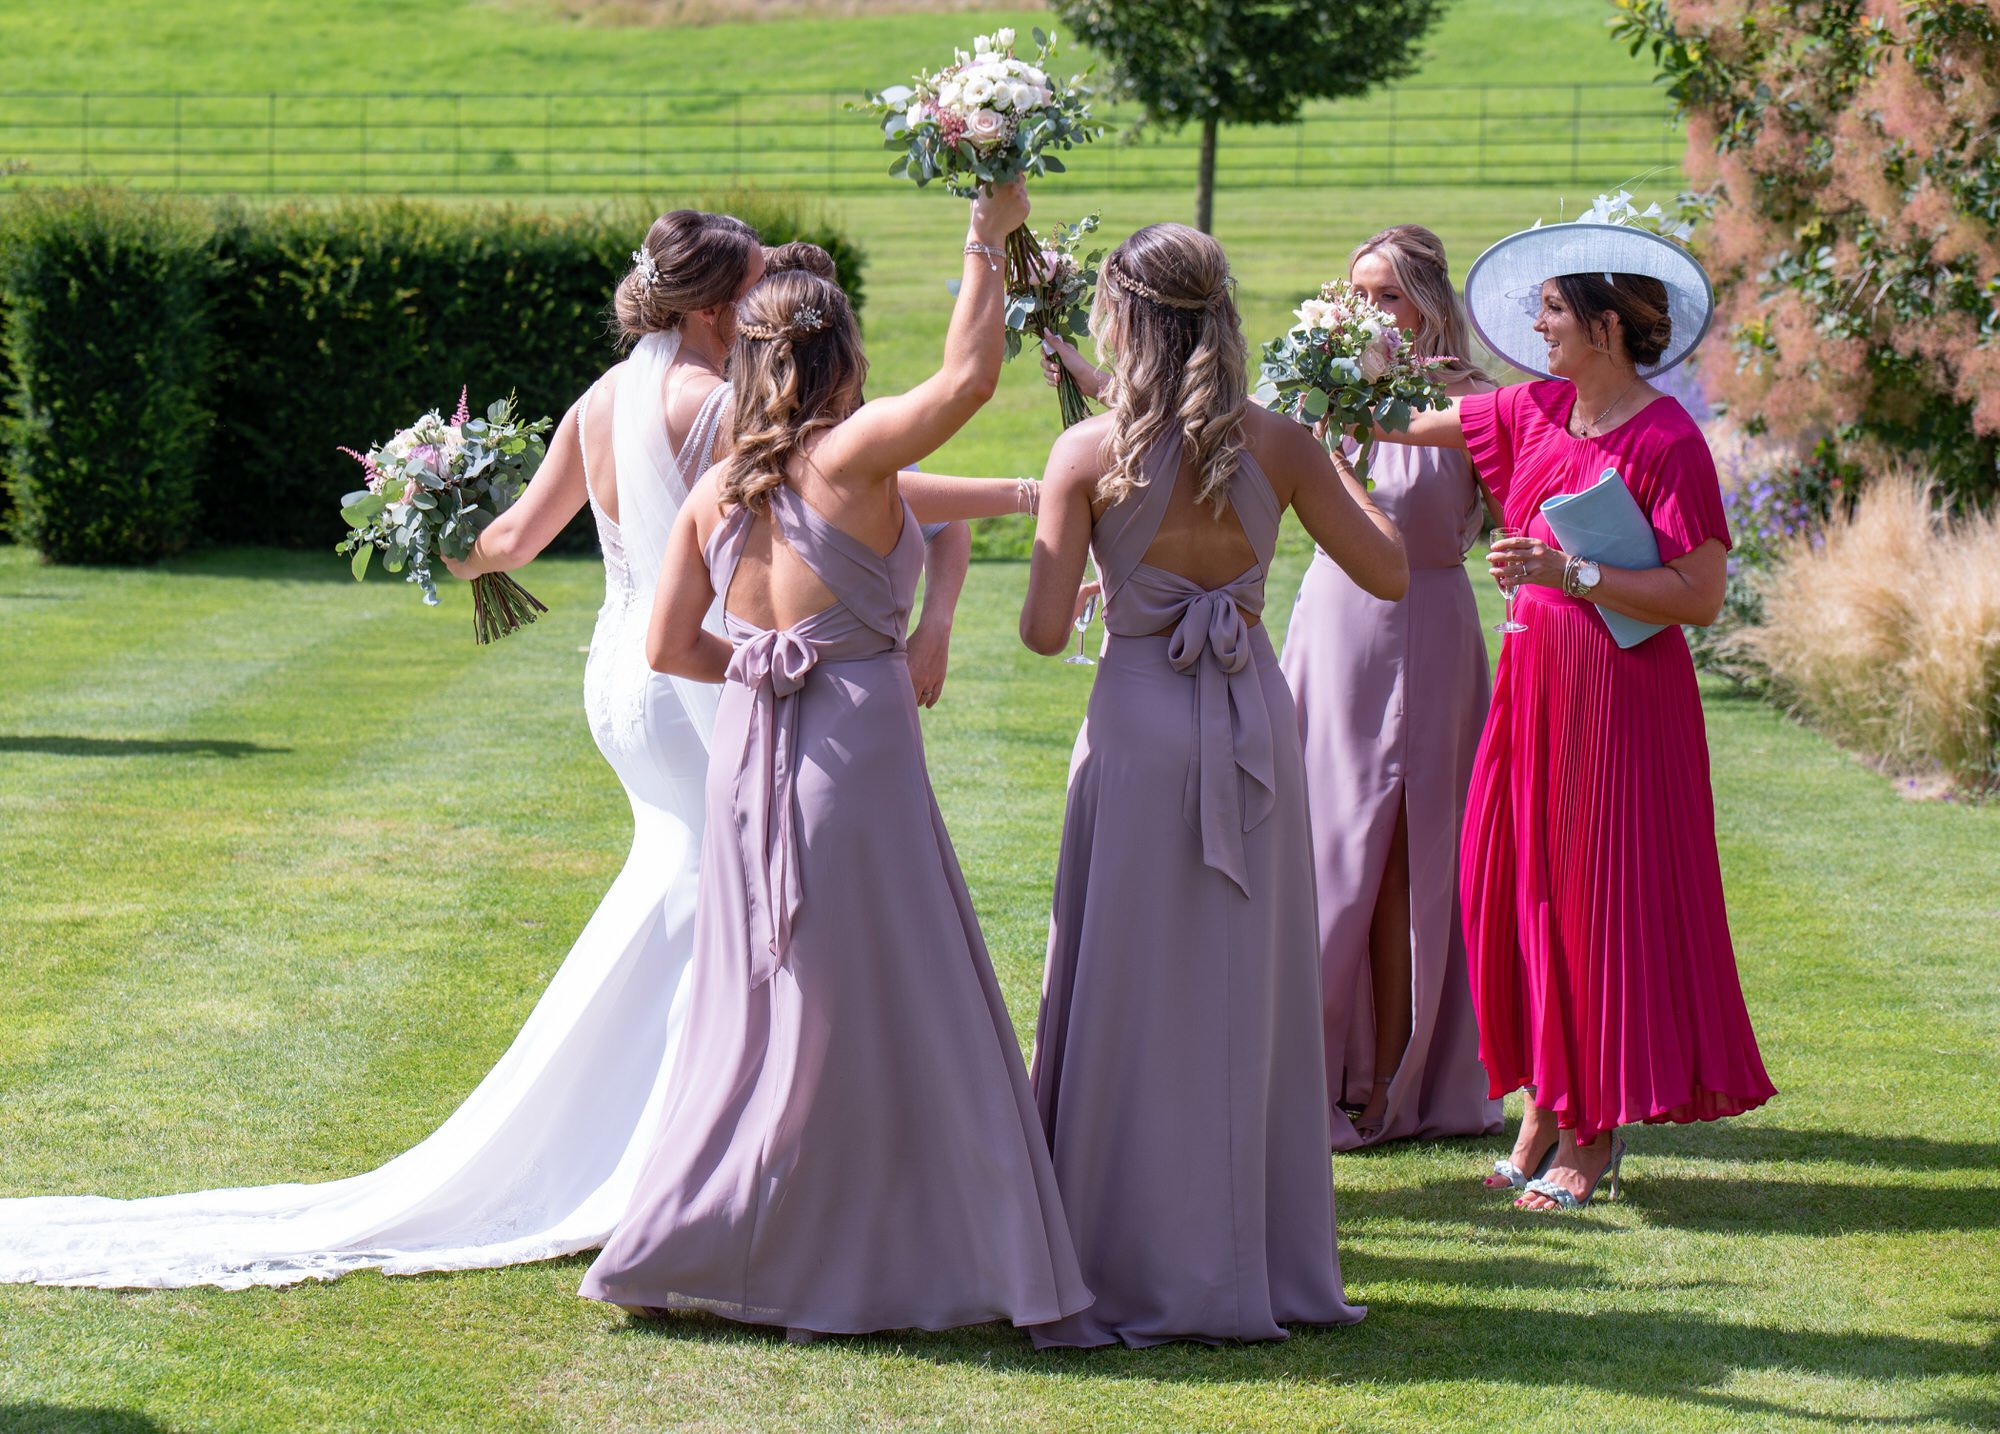  bride and bridesmaids dancing in gardens at summer wedding 